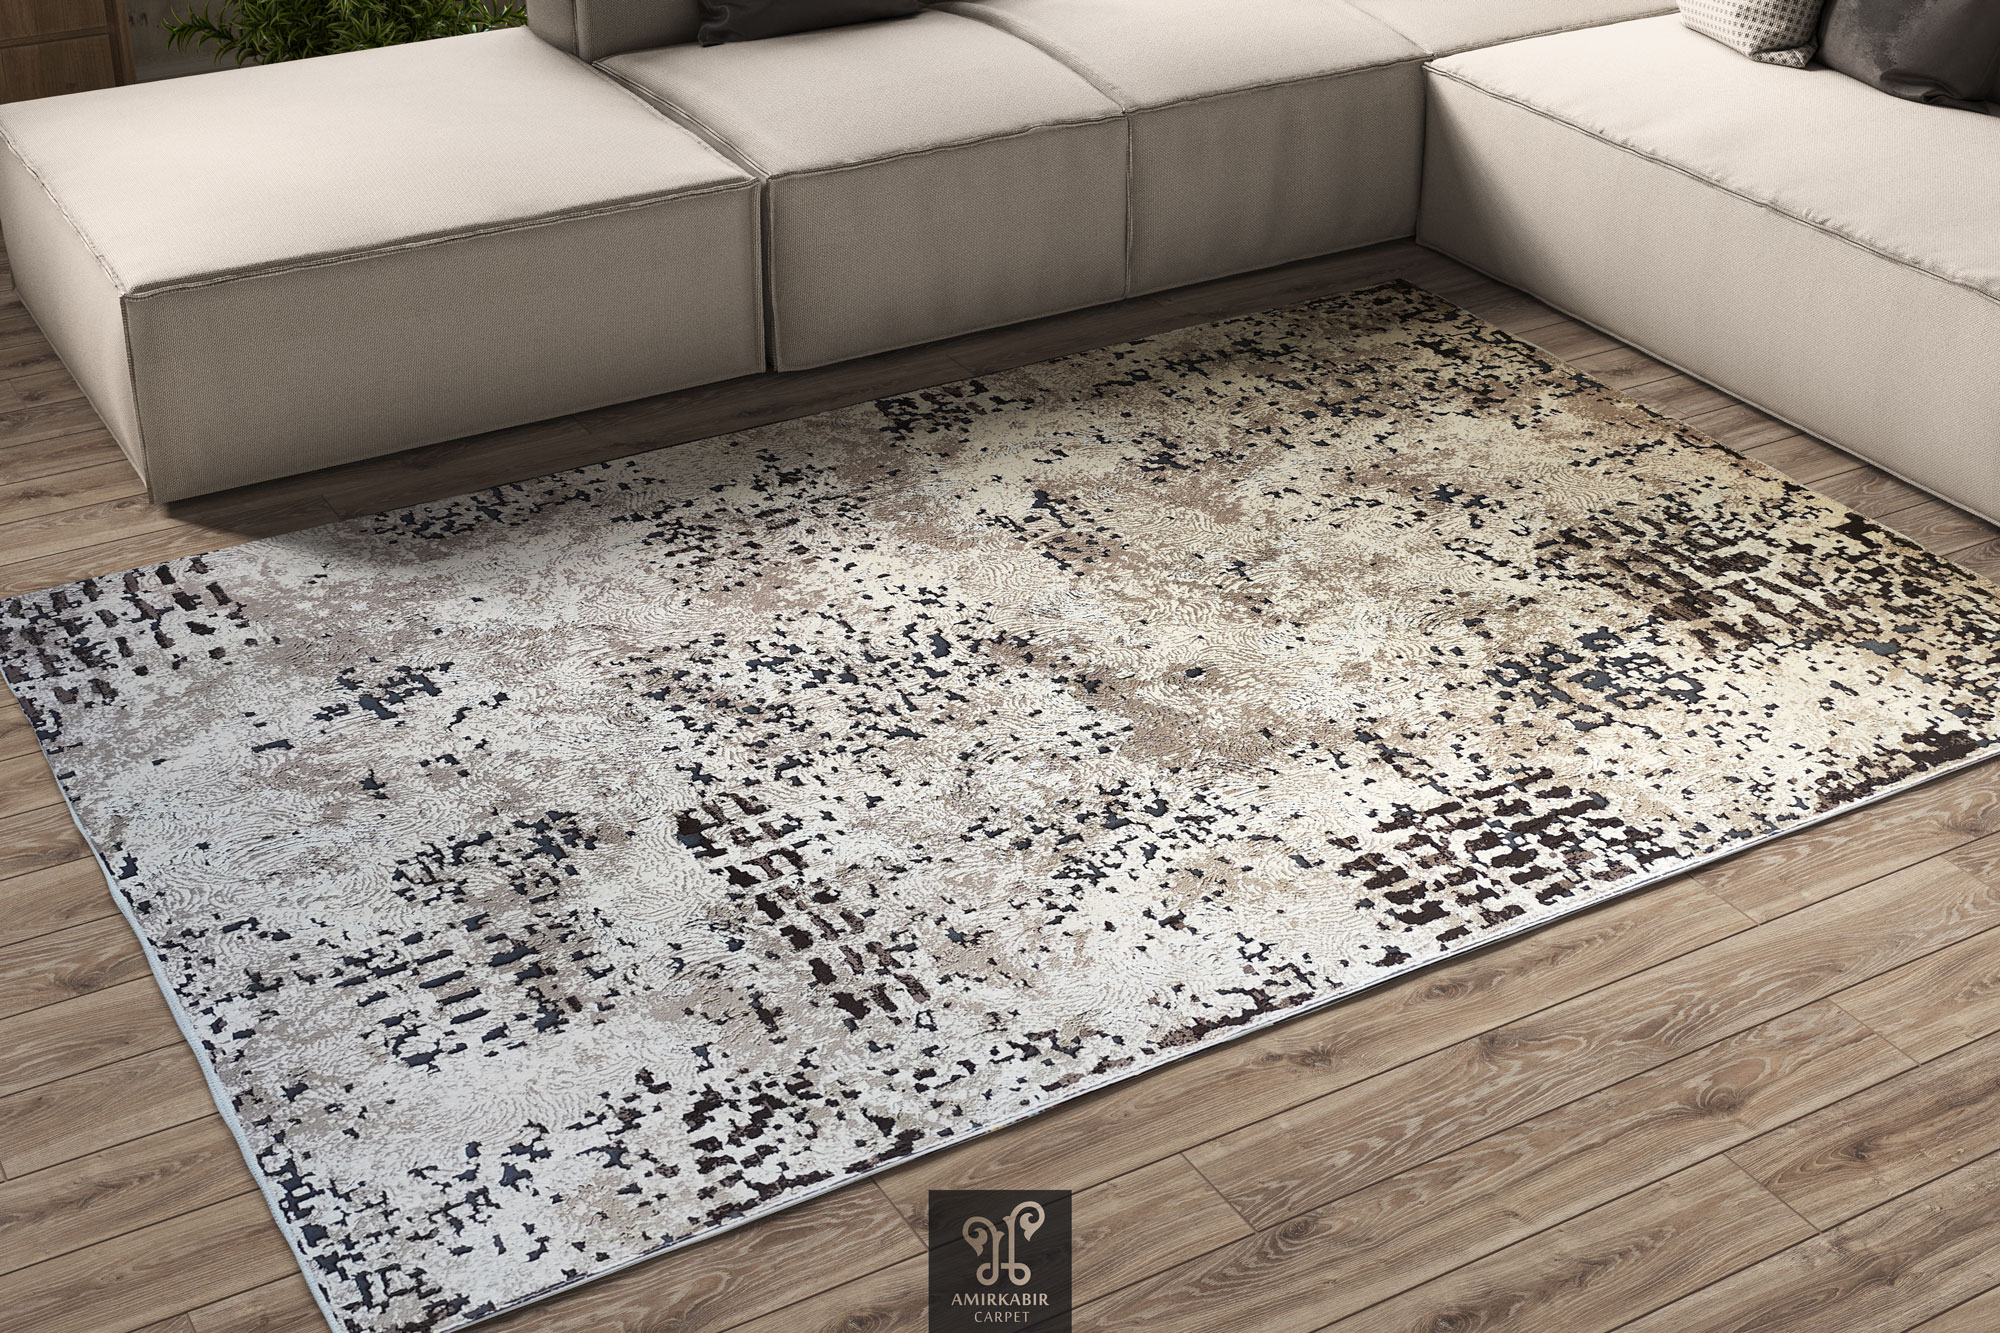 Vintage 400 reeds carpet -1300 Density RUG - Modern Carpet - Harmony Carpet 1109 carpet code